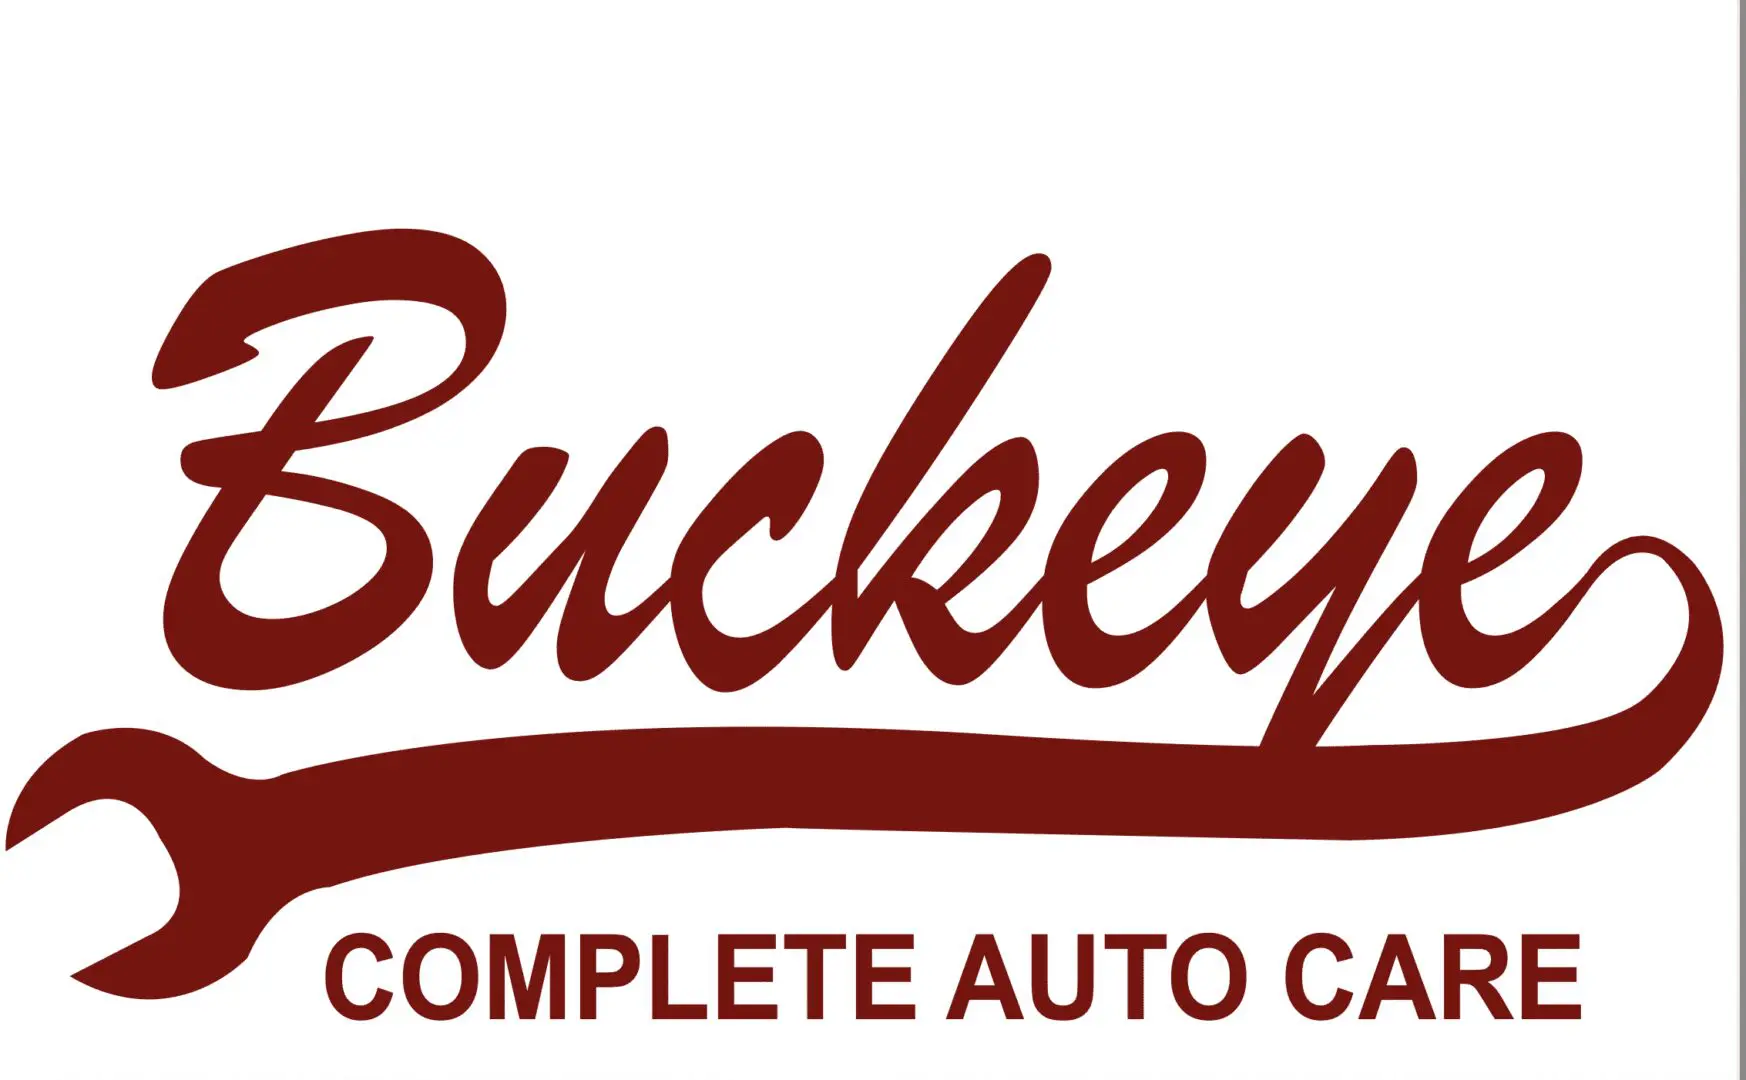 Buckeye Complete Auto Care Logo